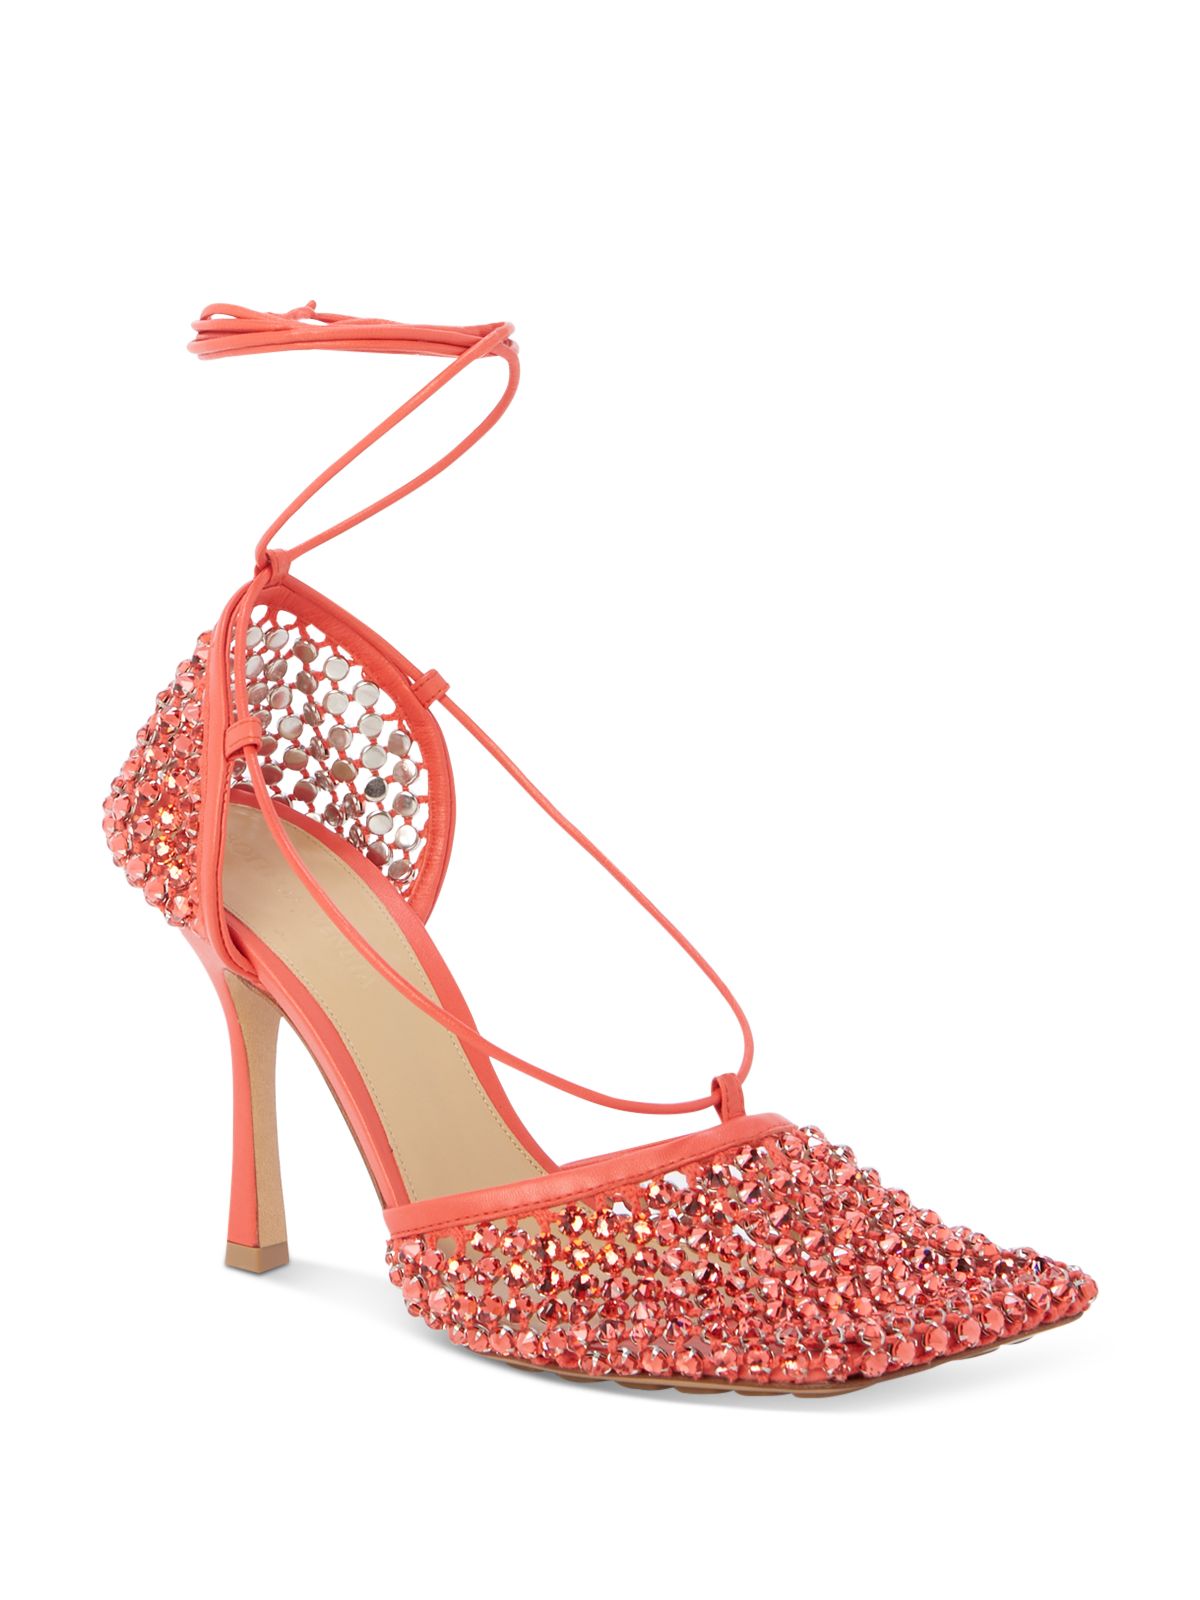 BOTTEGA VENETA Womens Coral Embellished Square Toe Stiletto Slip On Dress Pumps Shoes 39